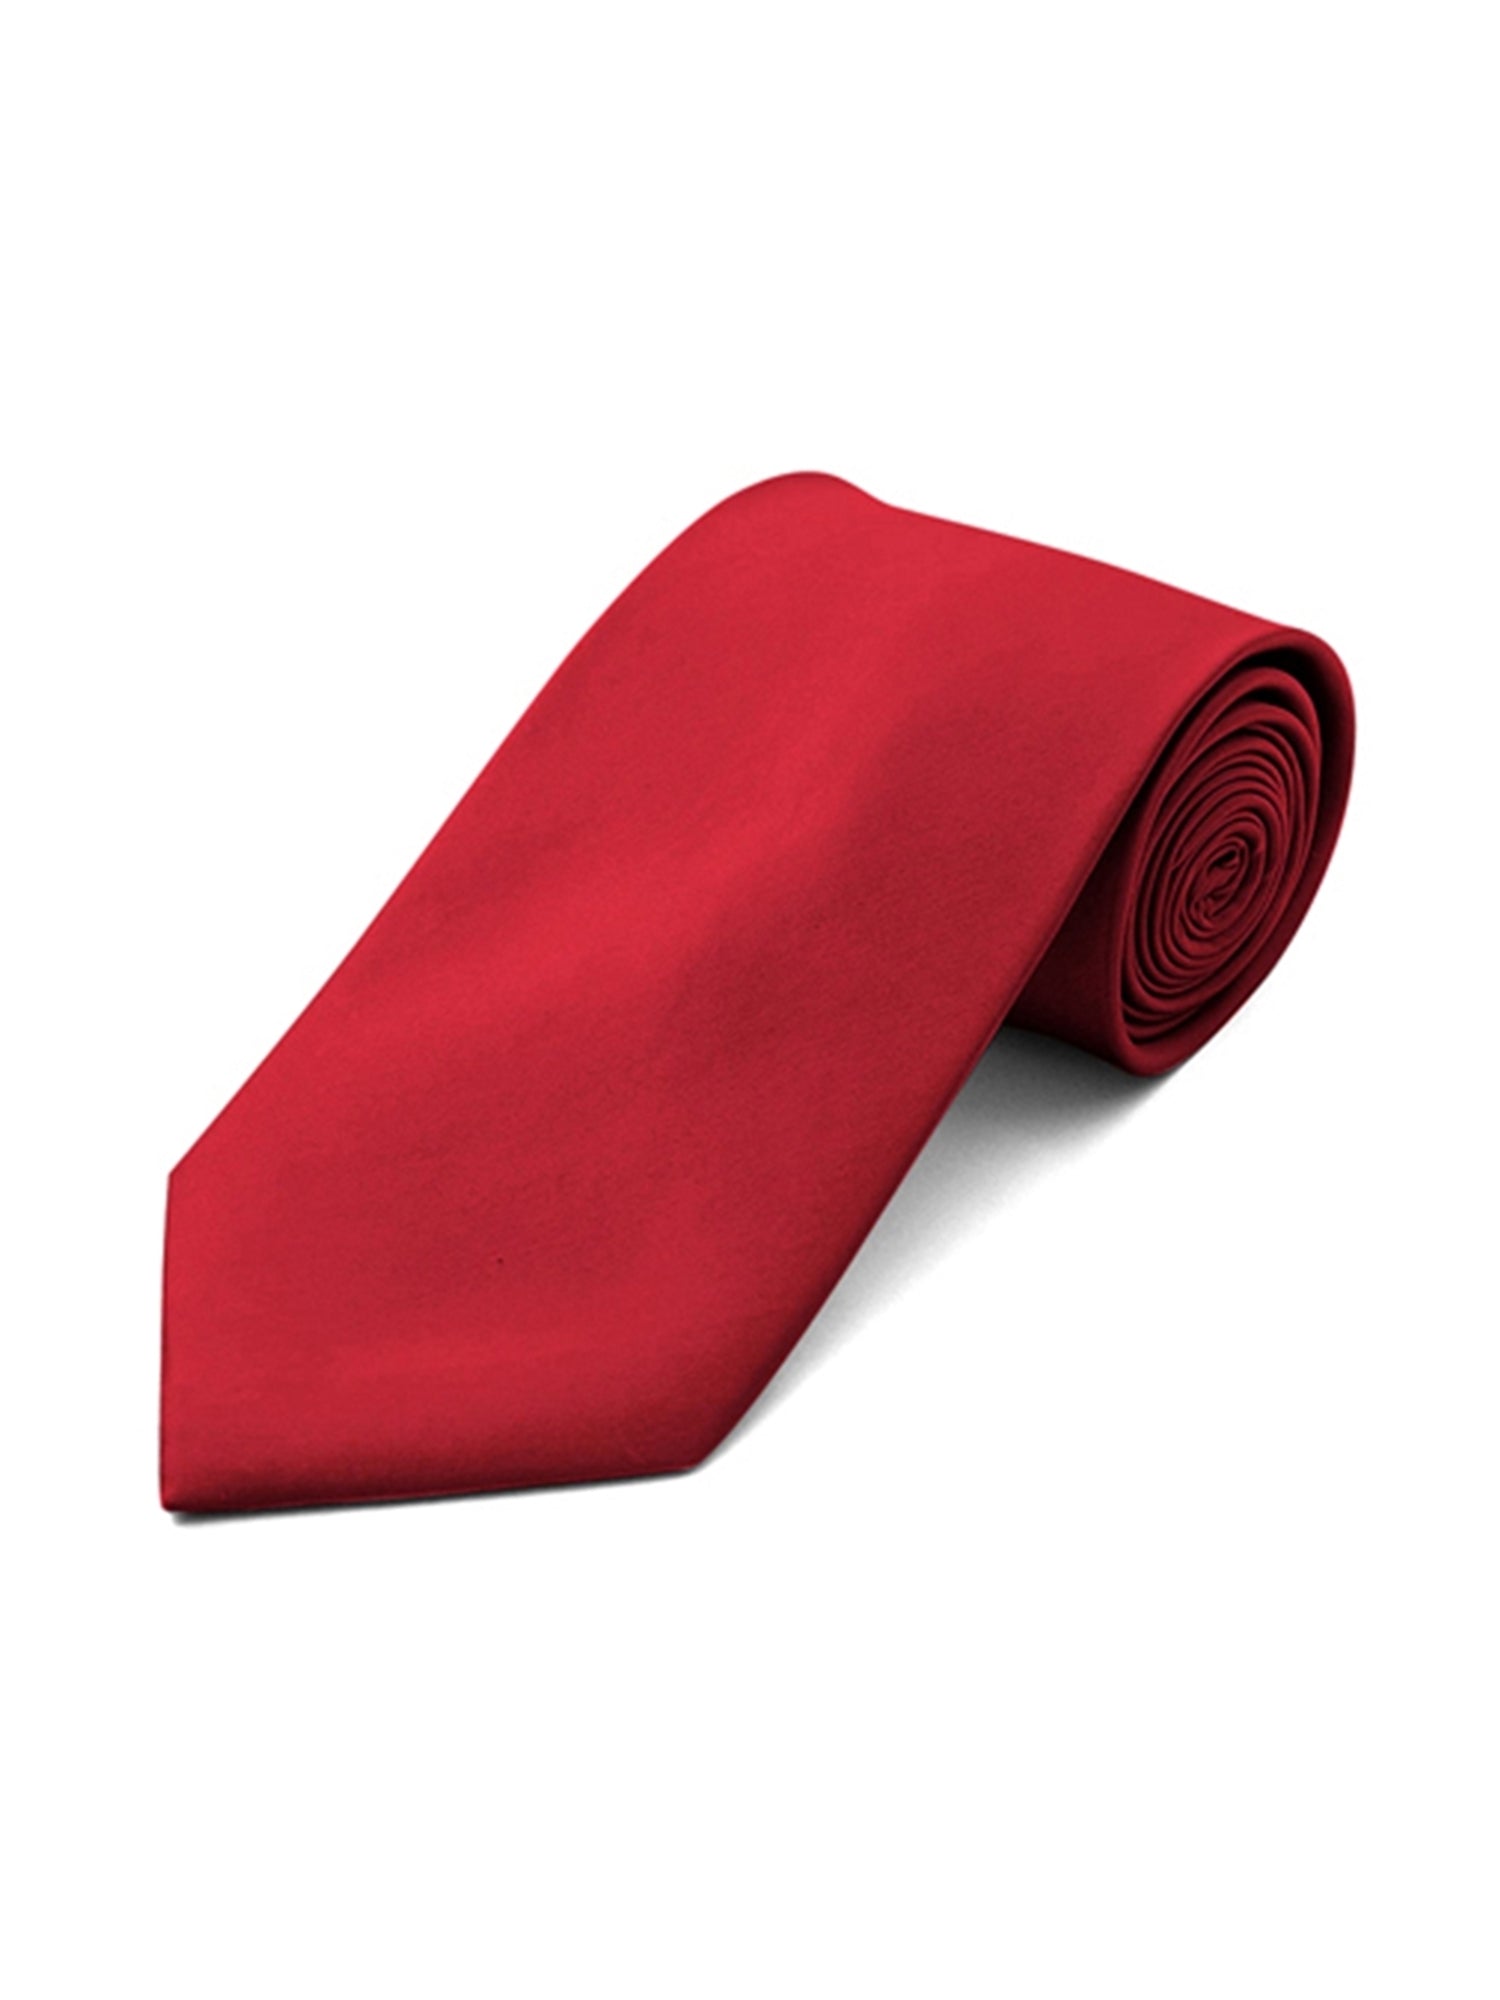 Men's Solid Color 2.75 Inch Wide And 57 Inch Long Slim Neckties Neck Tie TheDapperTie Burgundy  